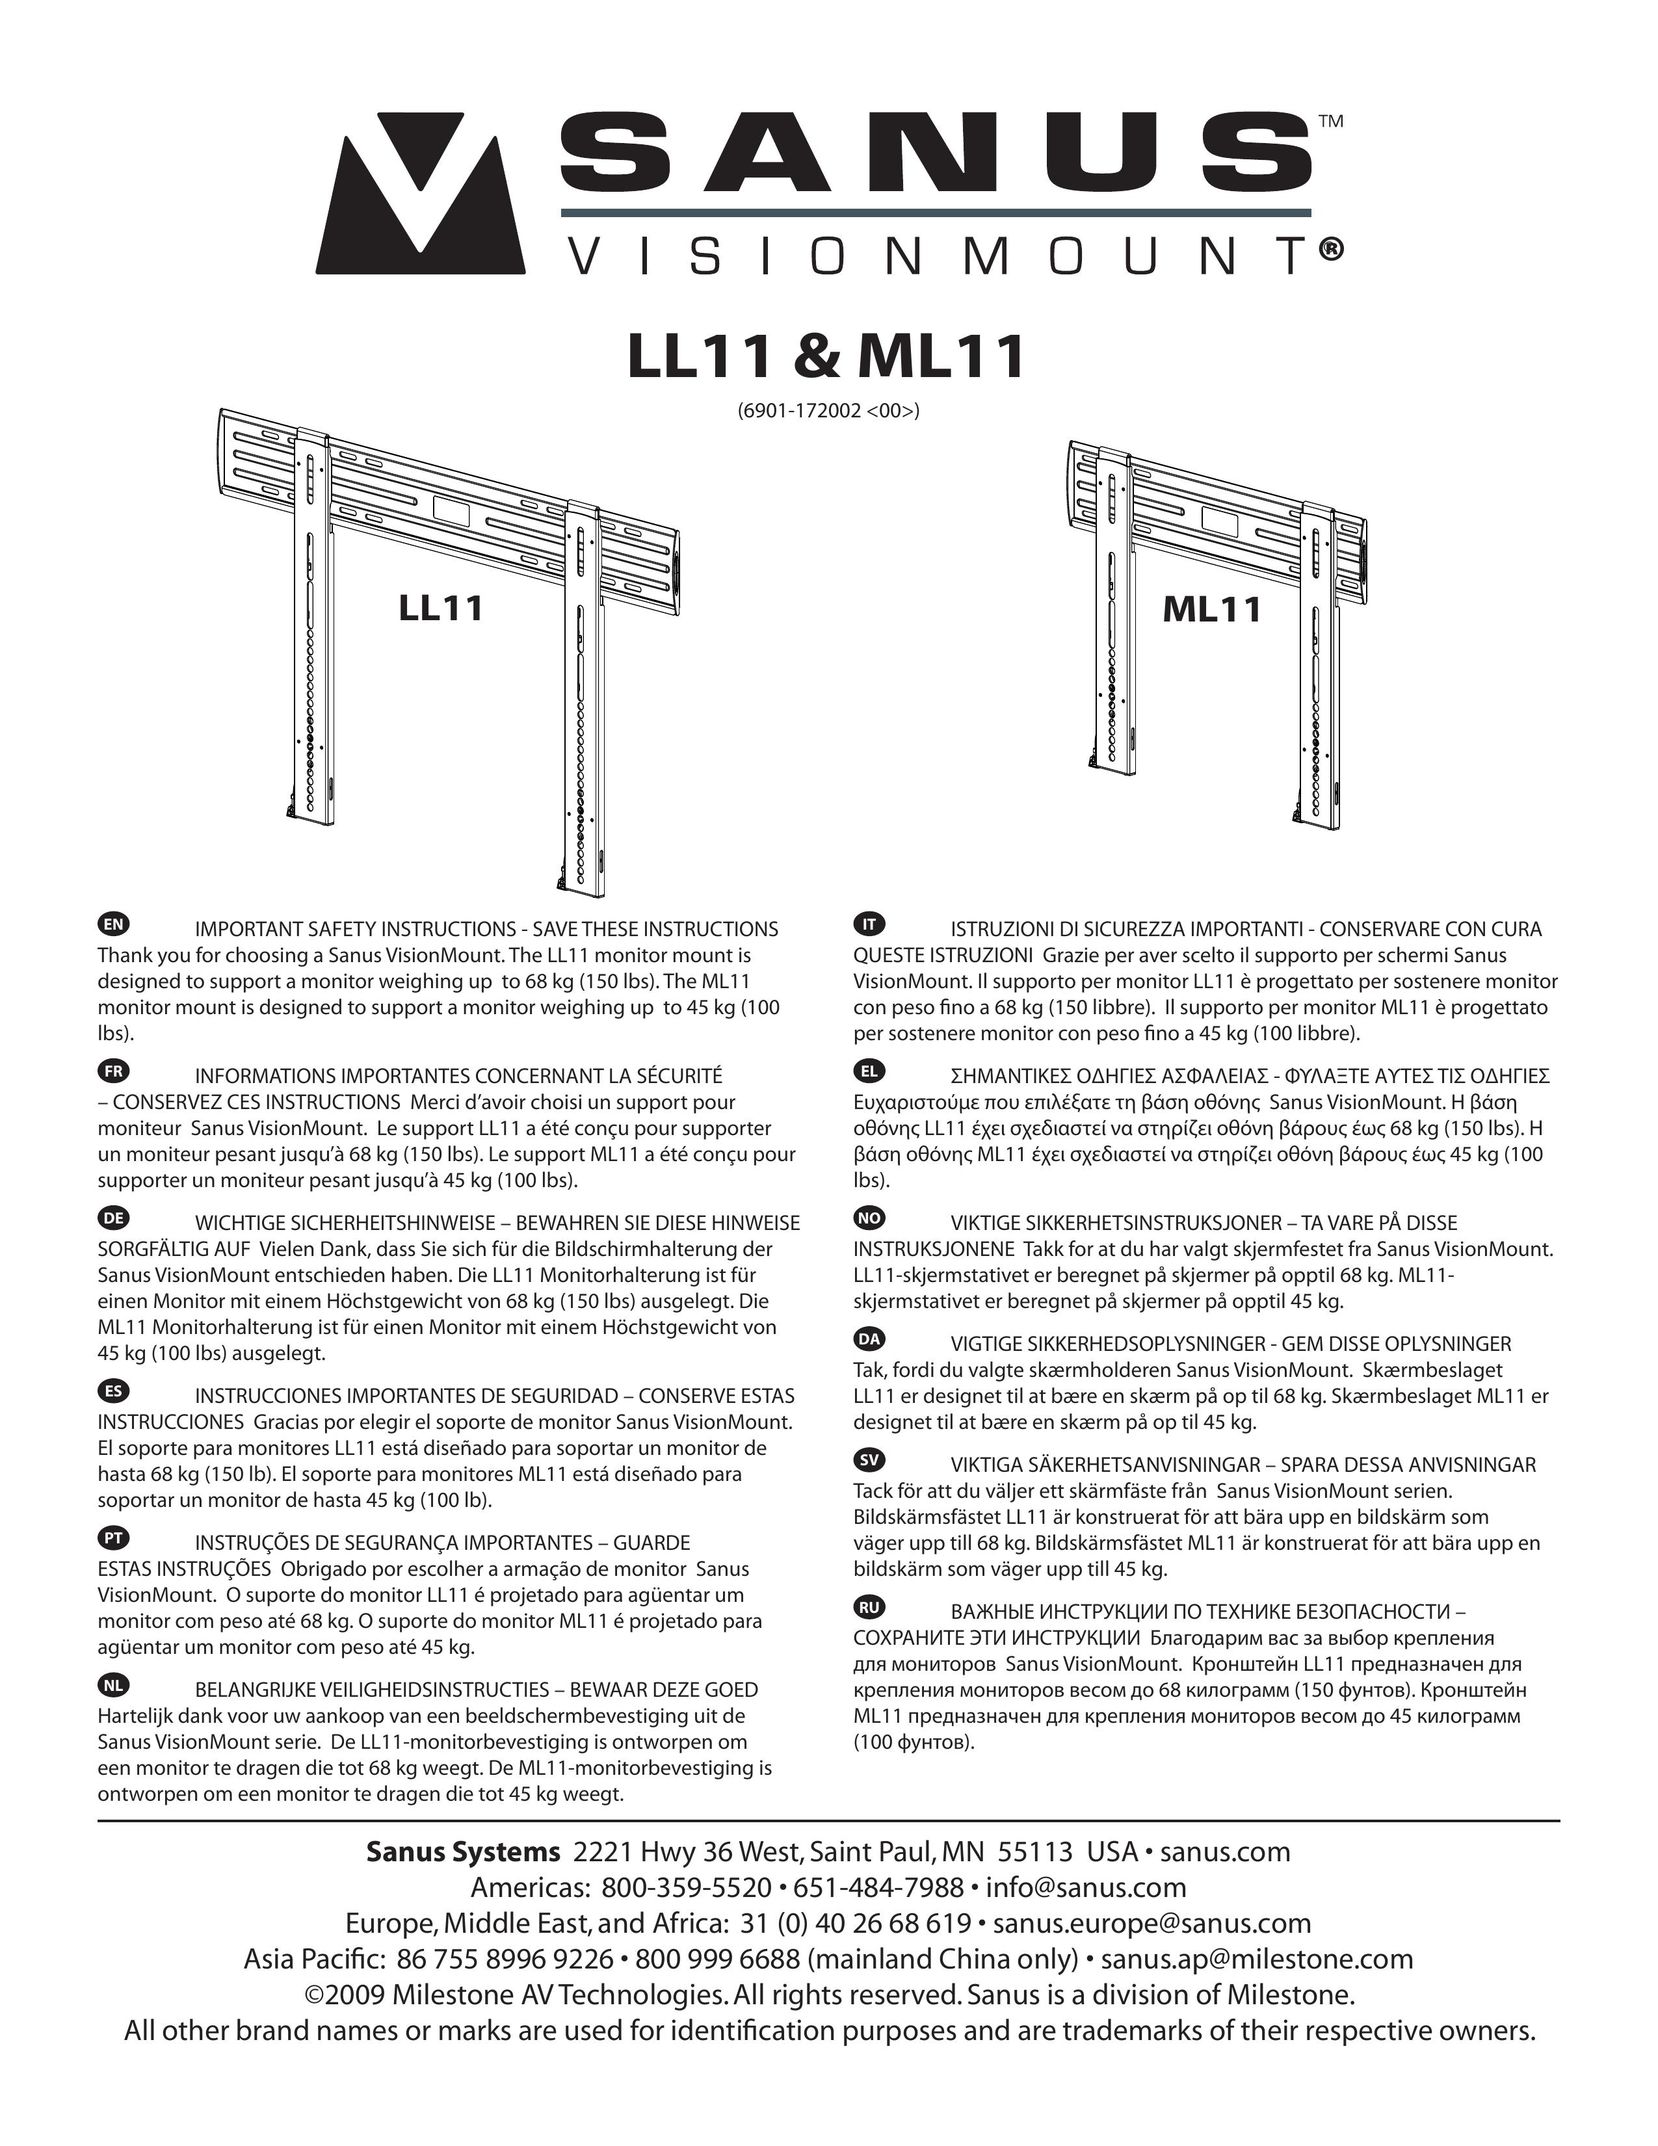 Sanus Systems LL11 TV Mount User Manual